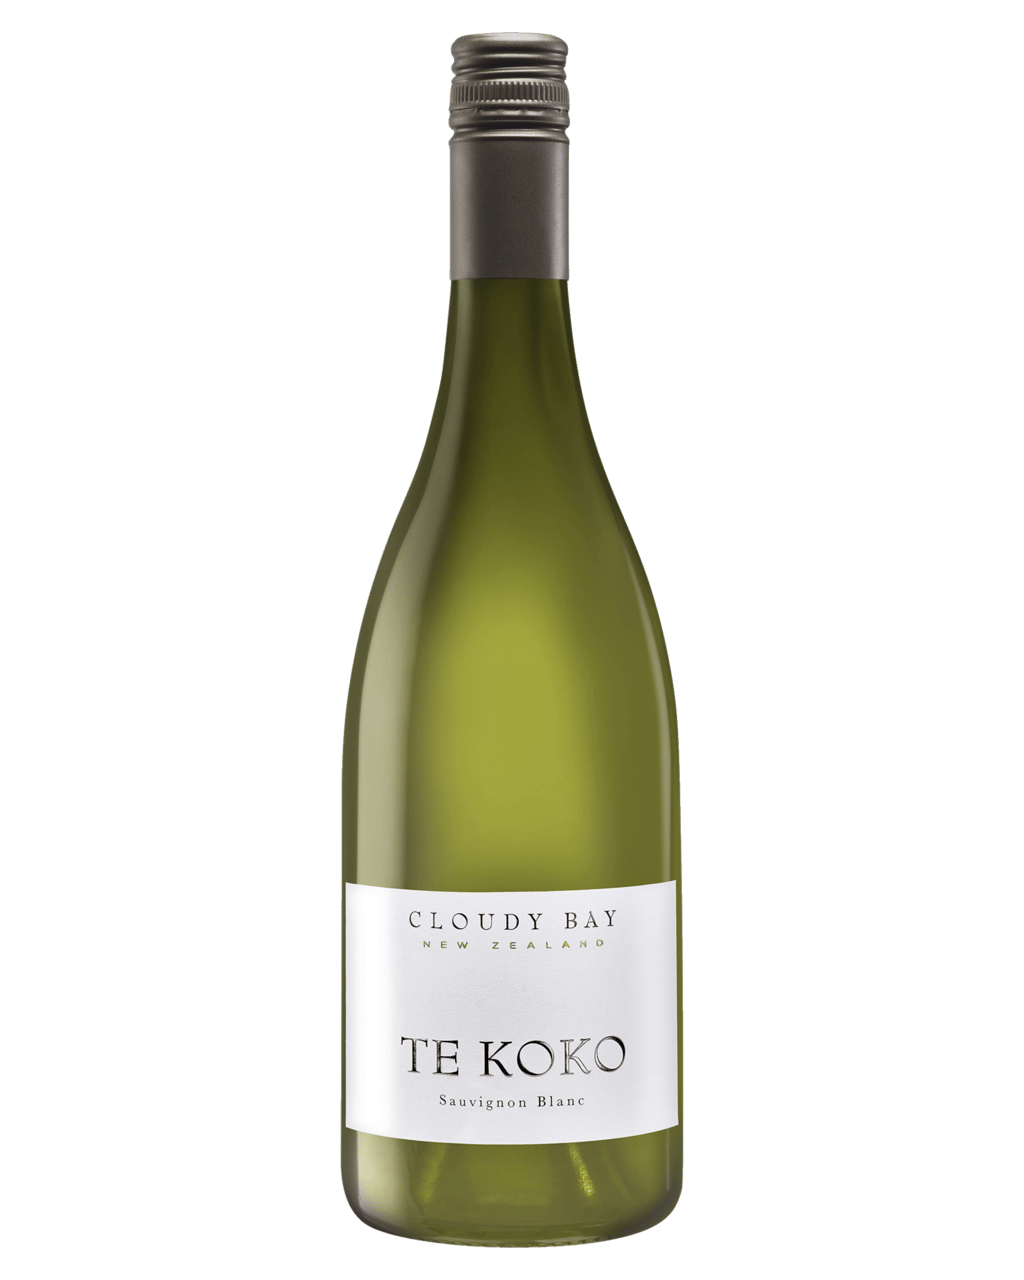 Cloudy Bay Te Koko Sauvignon Blanc 2014 : r/wine